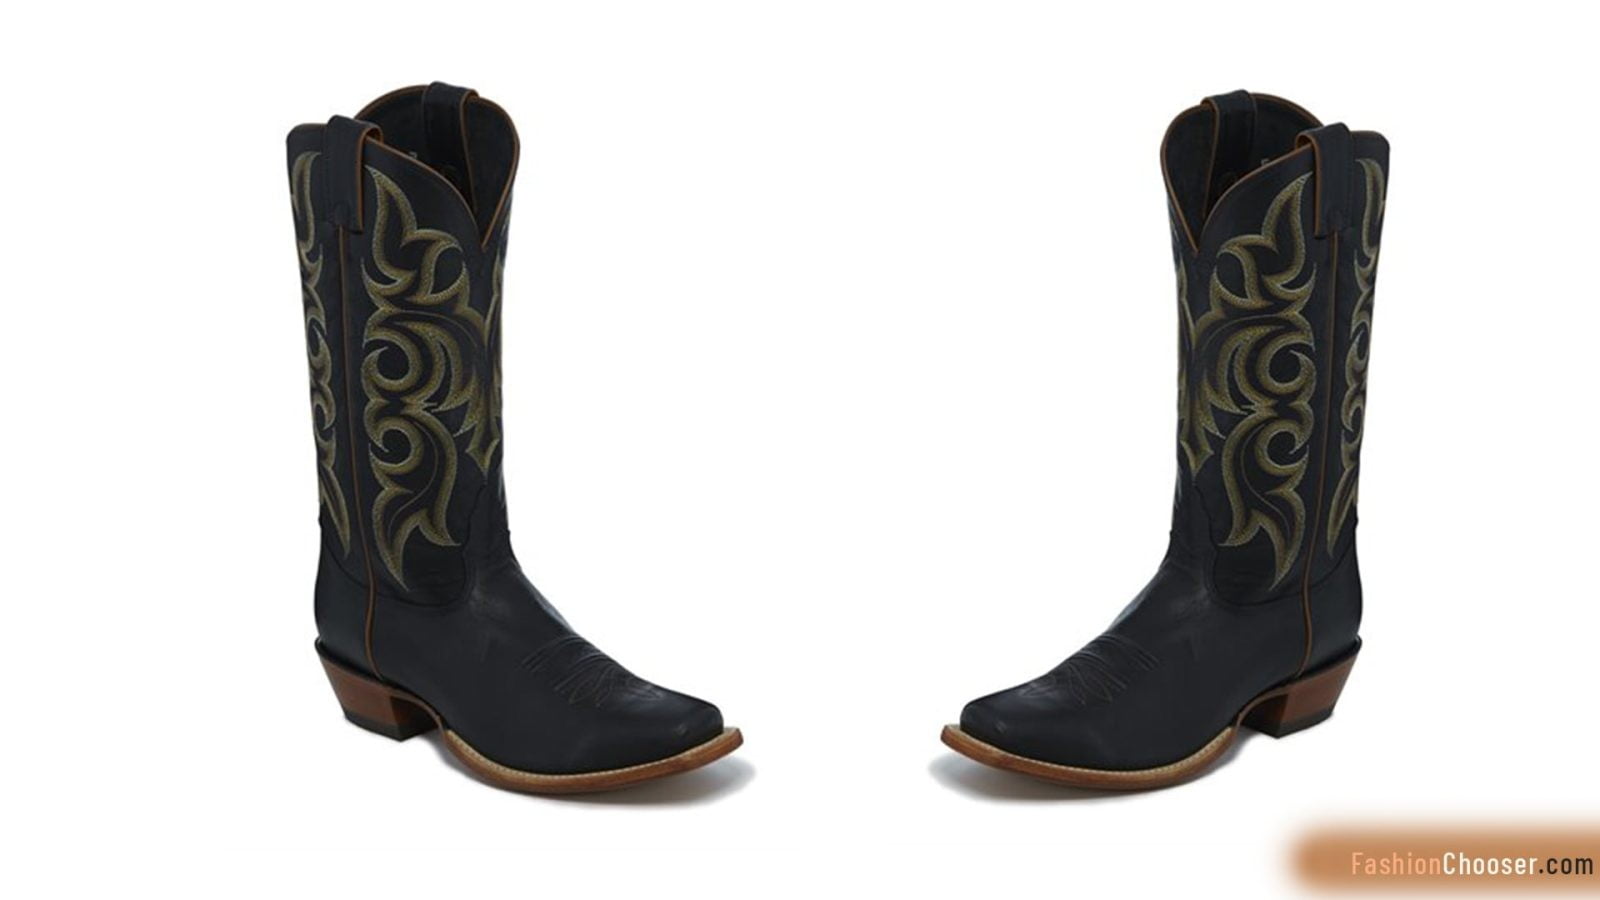 Nocona legacy cowboy boots brand are comfortable